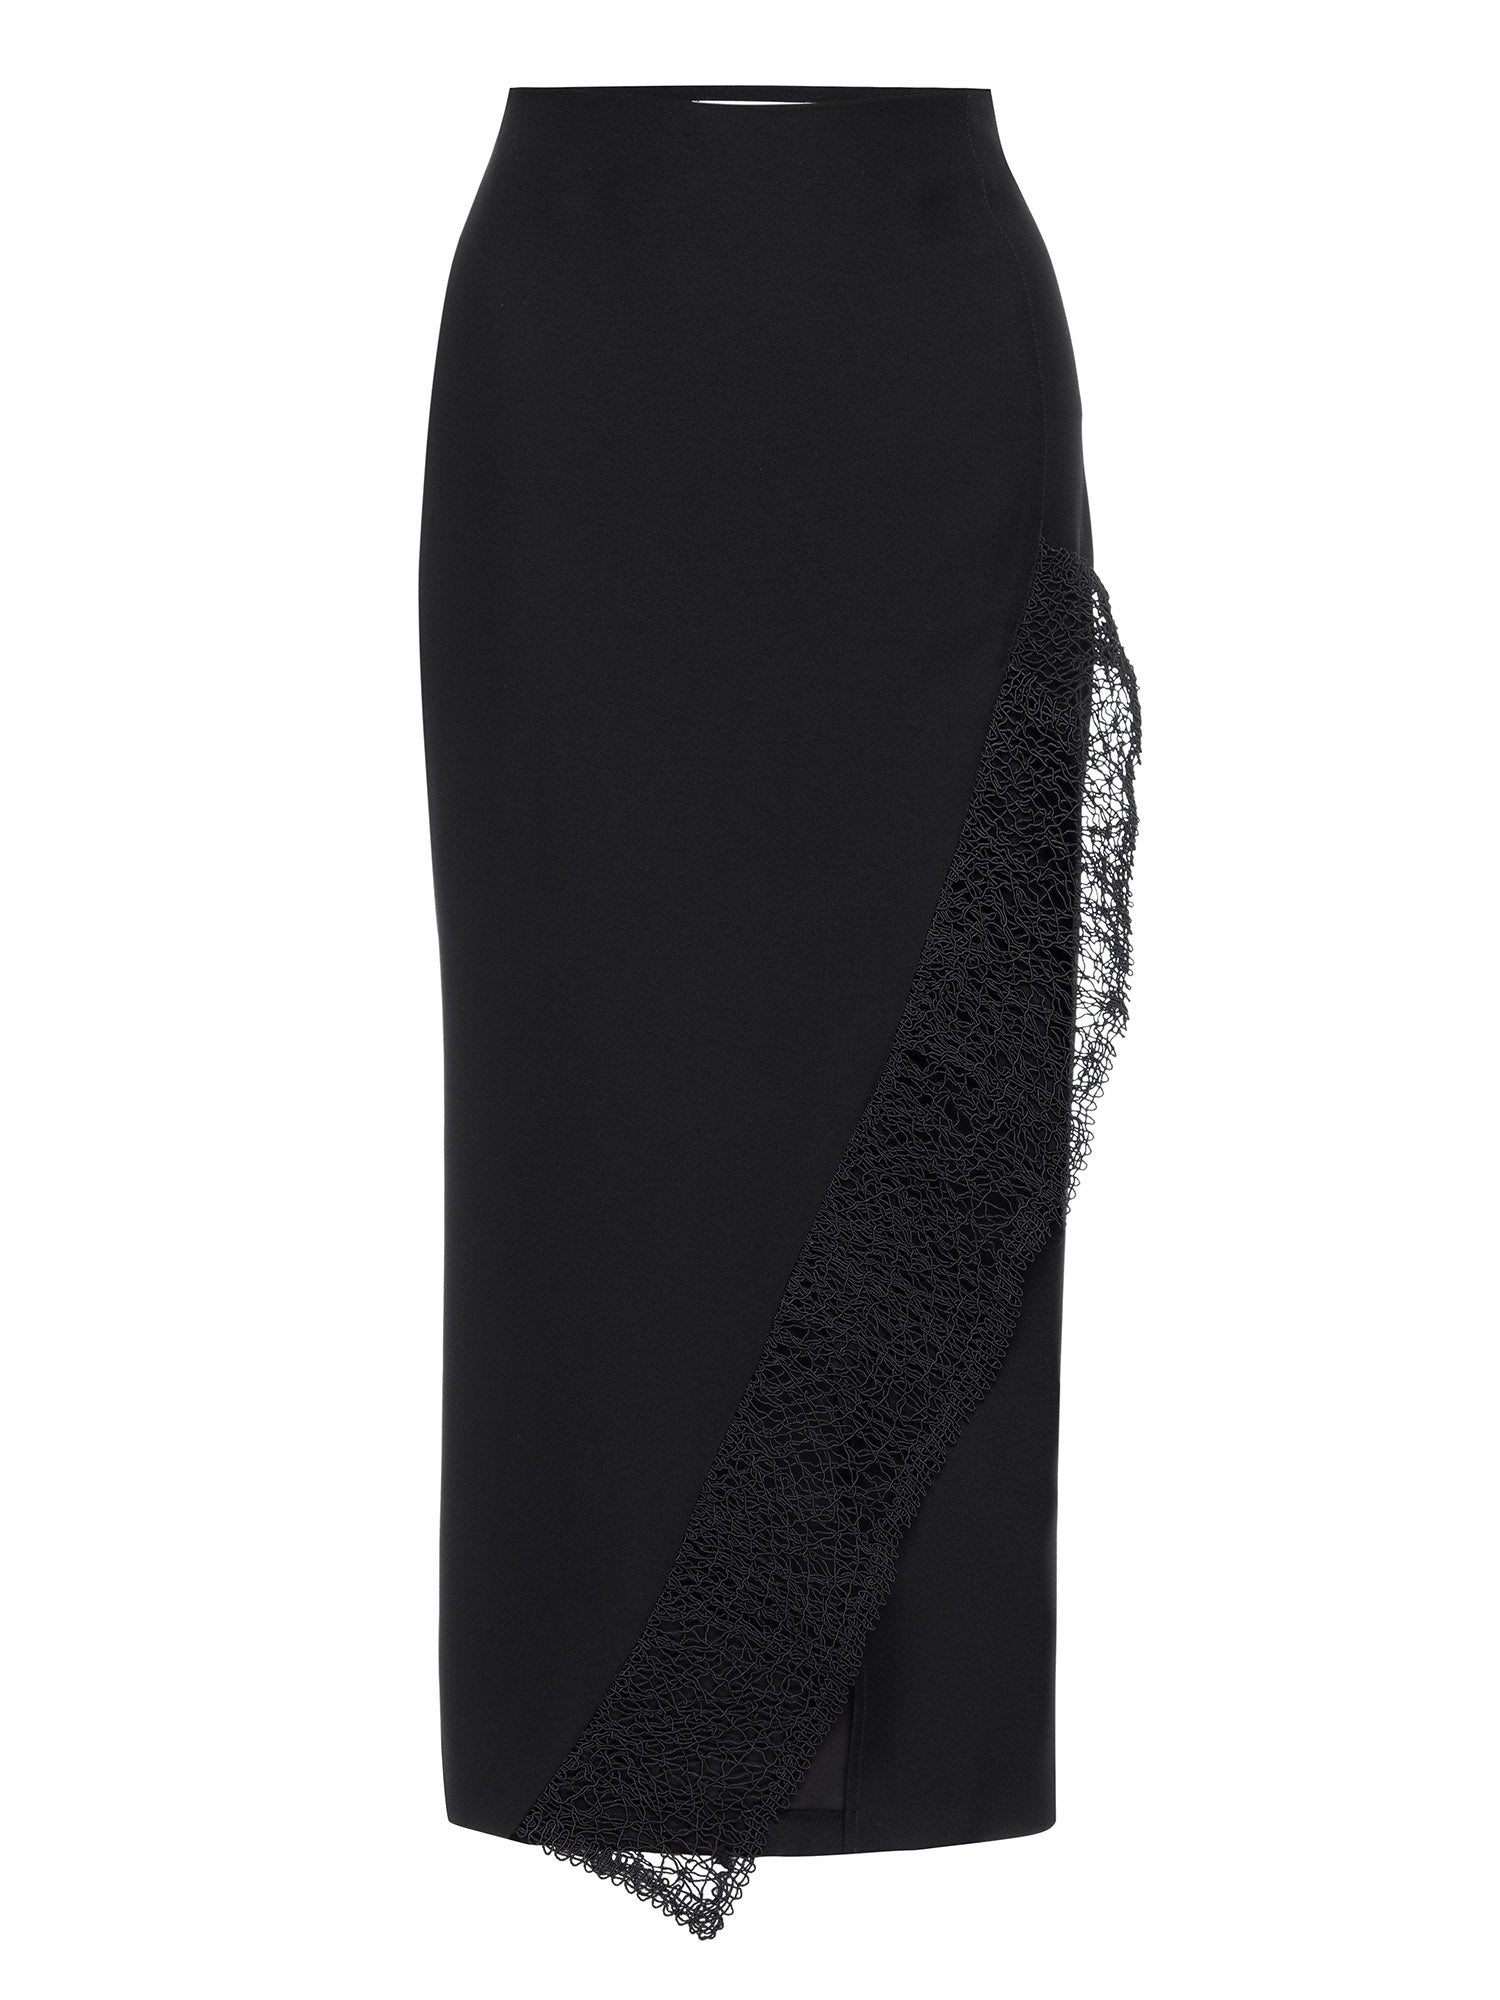 Camille black lace slit midi skirt flat view